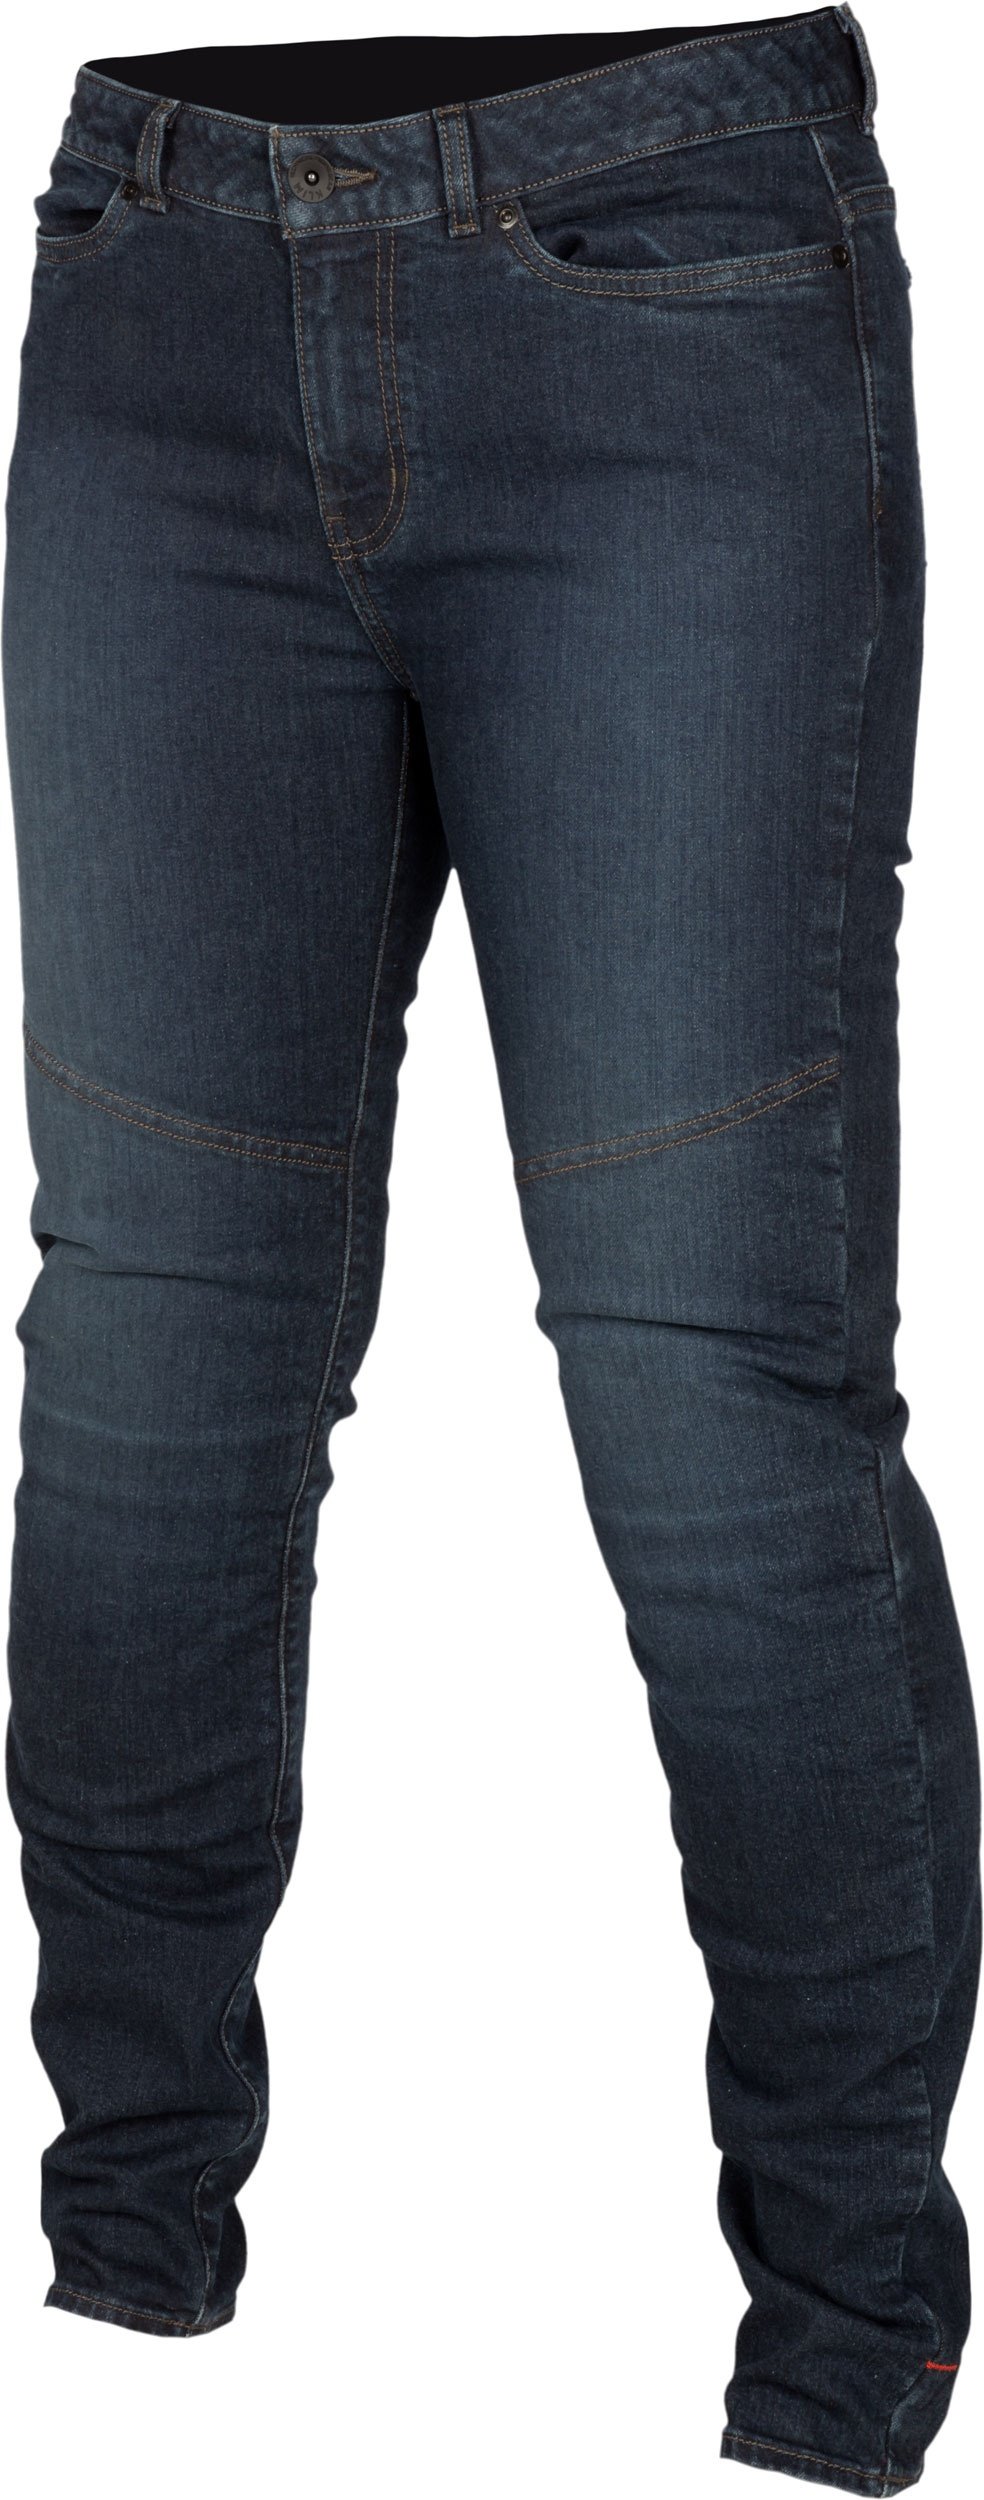 Klim Betty Tapered Stretch Denim, jeans femmes - Bleu Foncé - 6